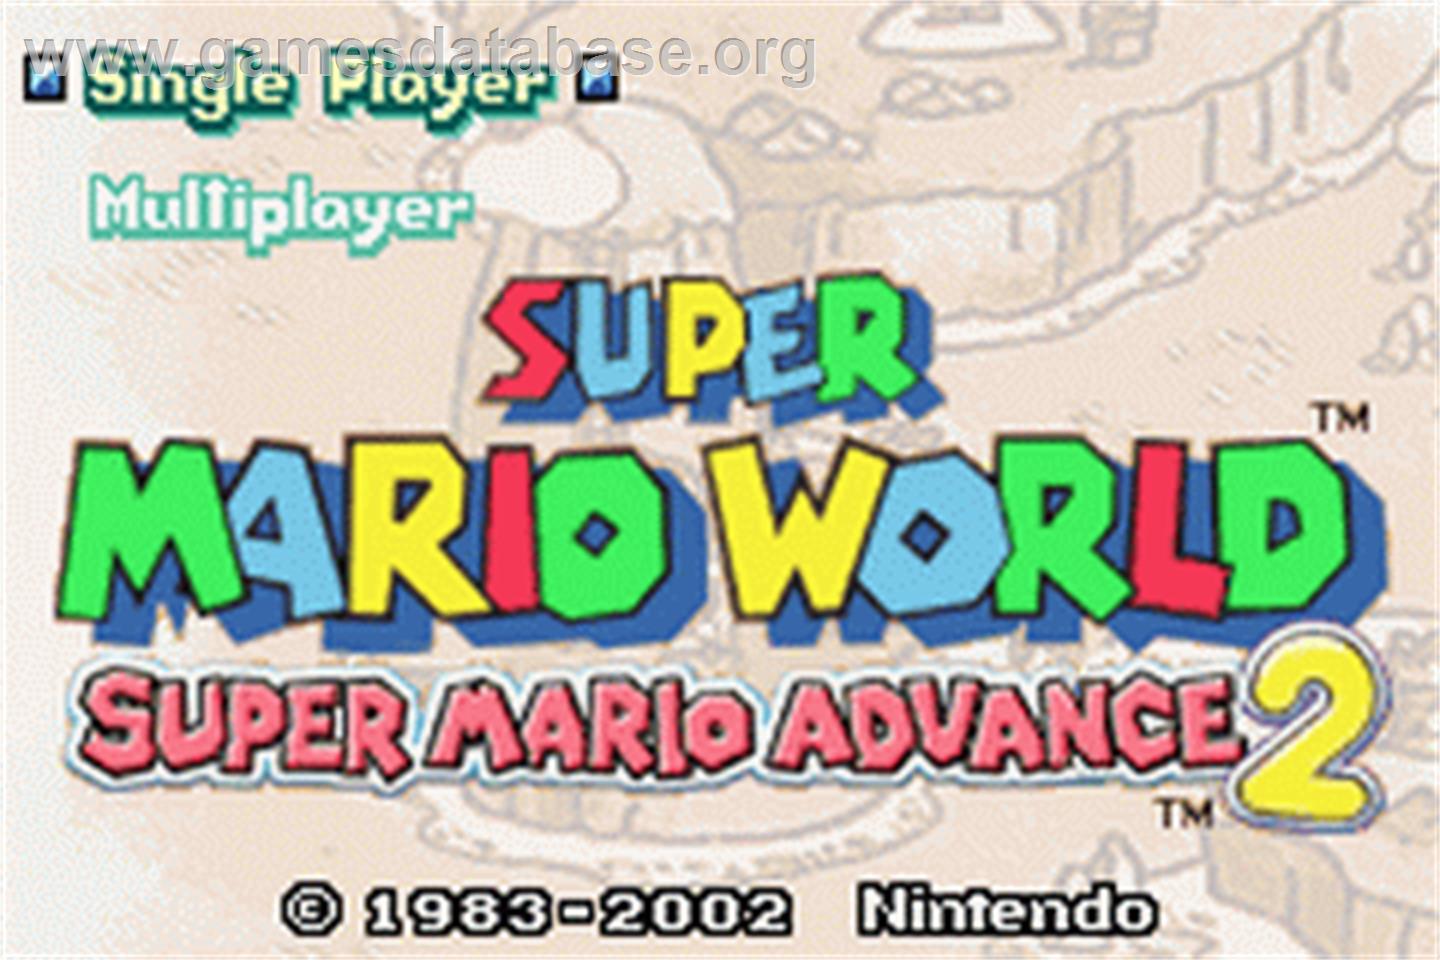 Super Mario World: Super Mario Advance 2 - Nintendo Game Boy Advance - Artwork - Title Screen